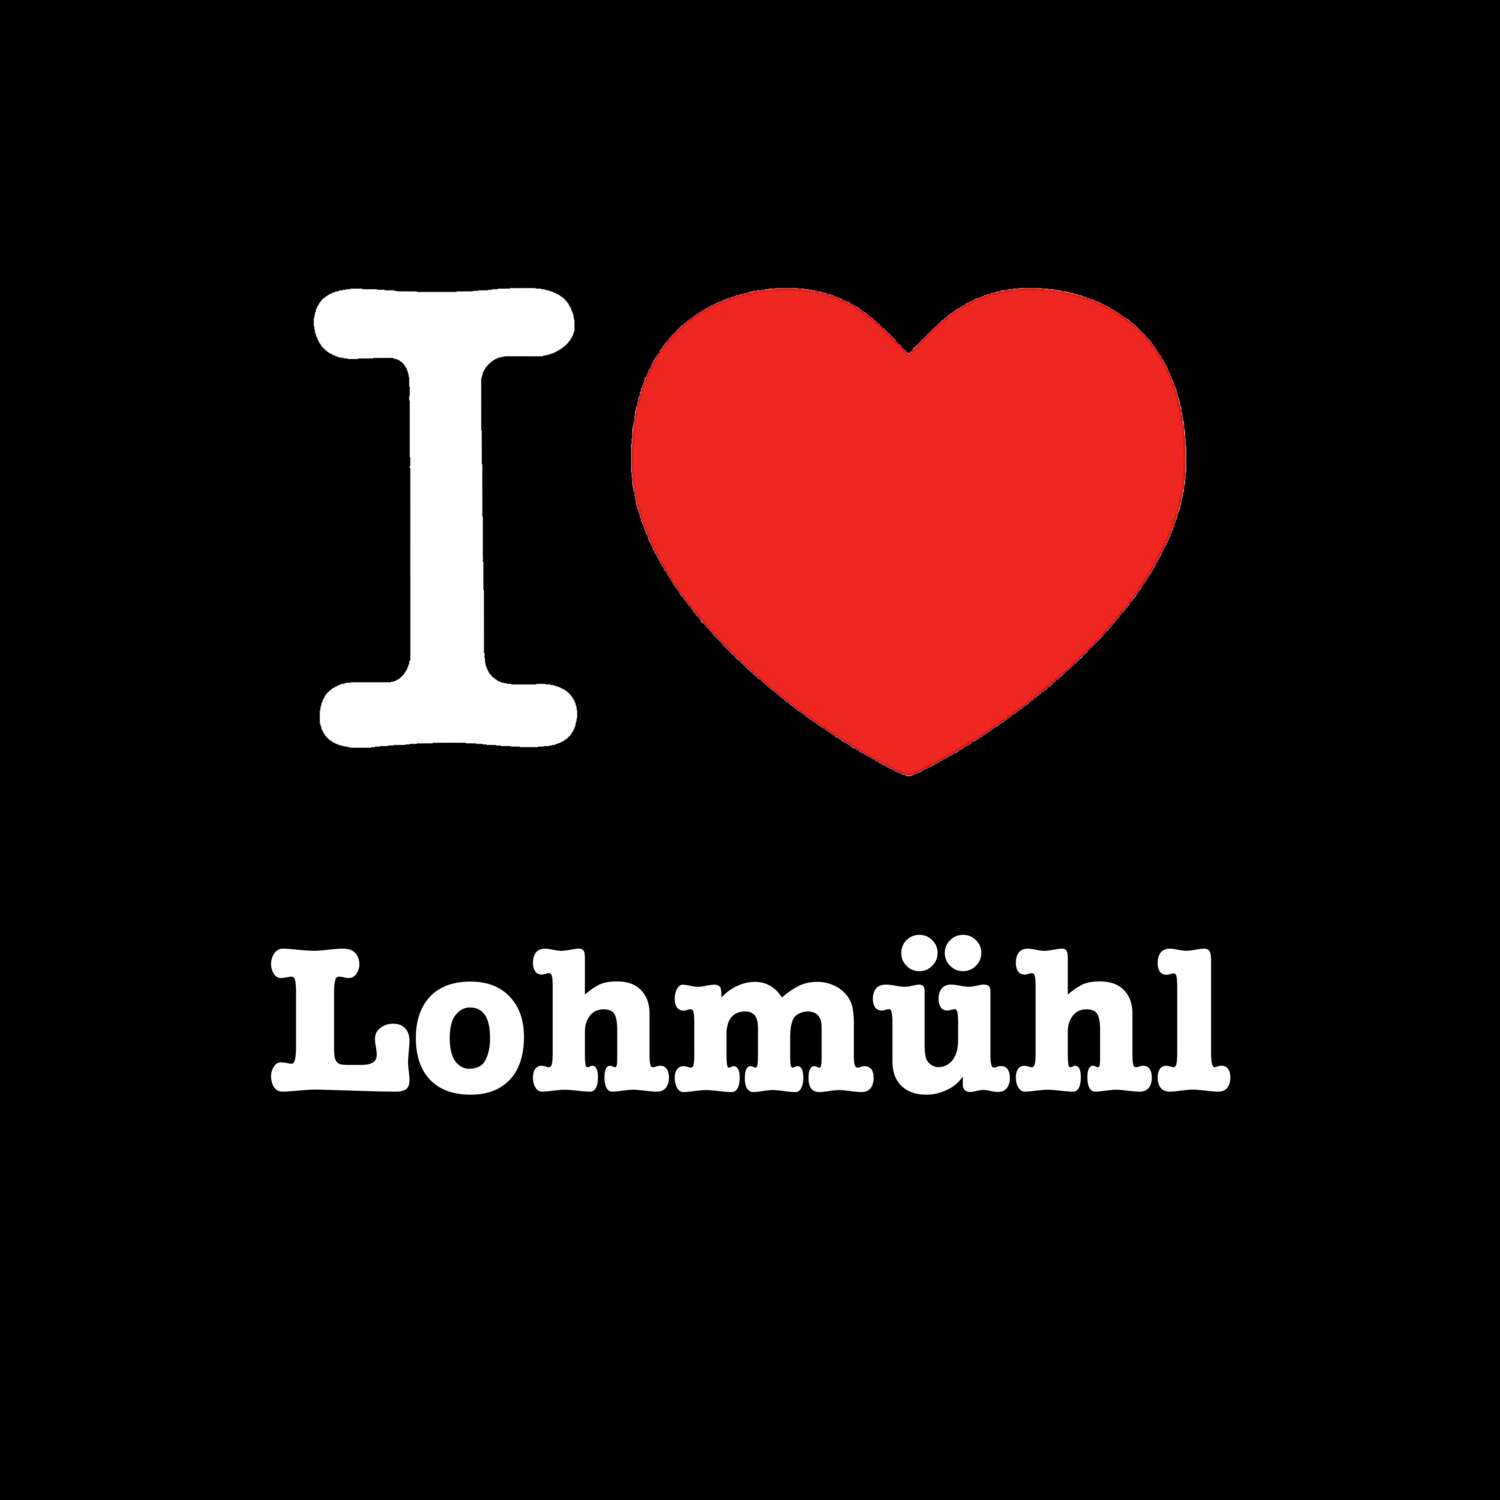 Lohmühl T-Shirt »I love«